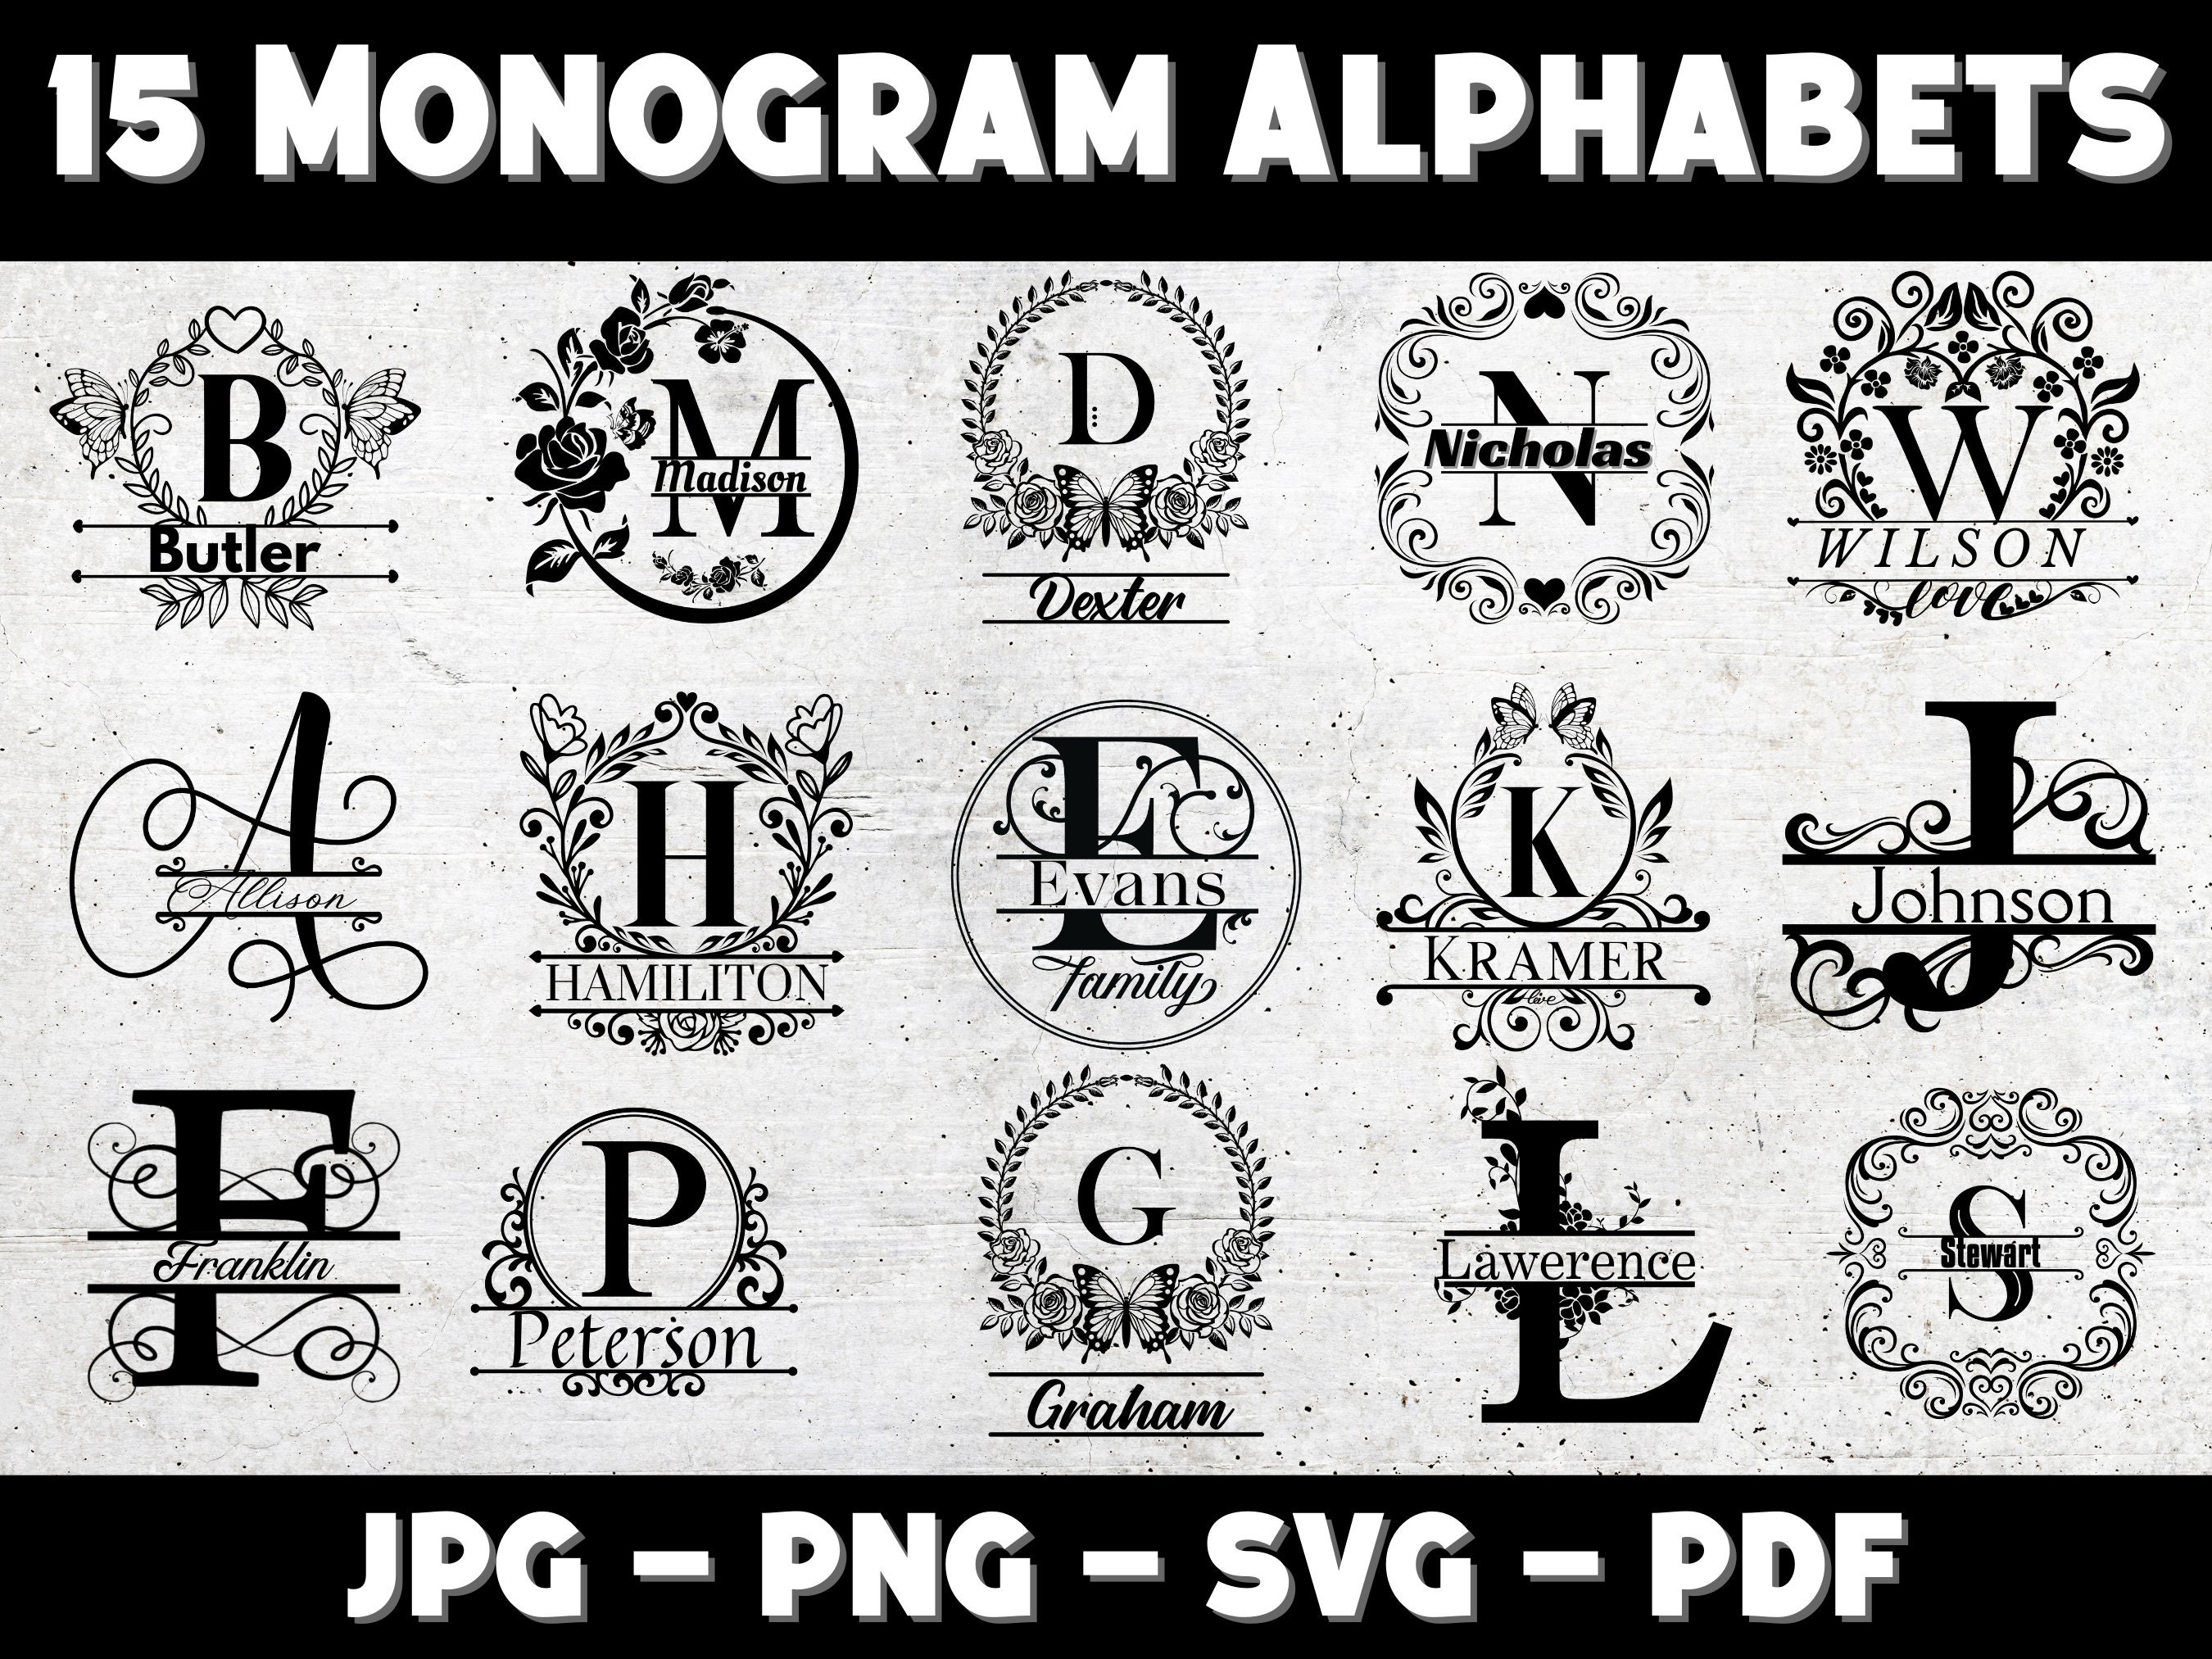 P&S Initial logo. Ampersand monogram logo Stock Vector